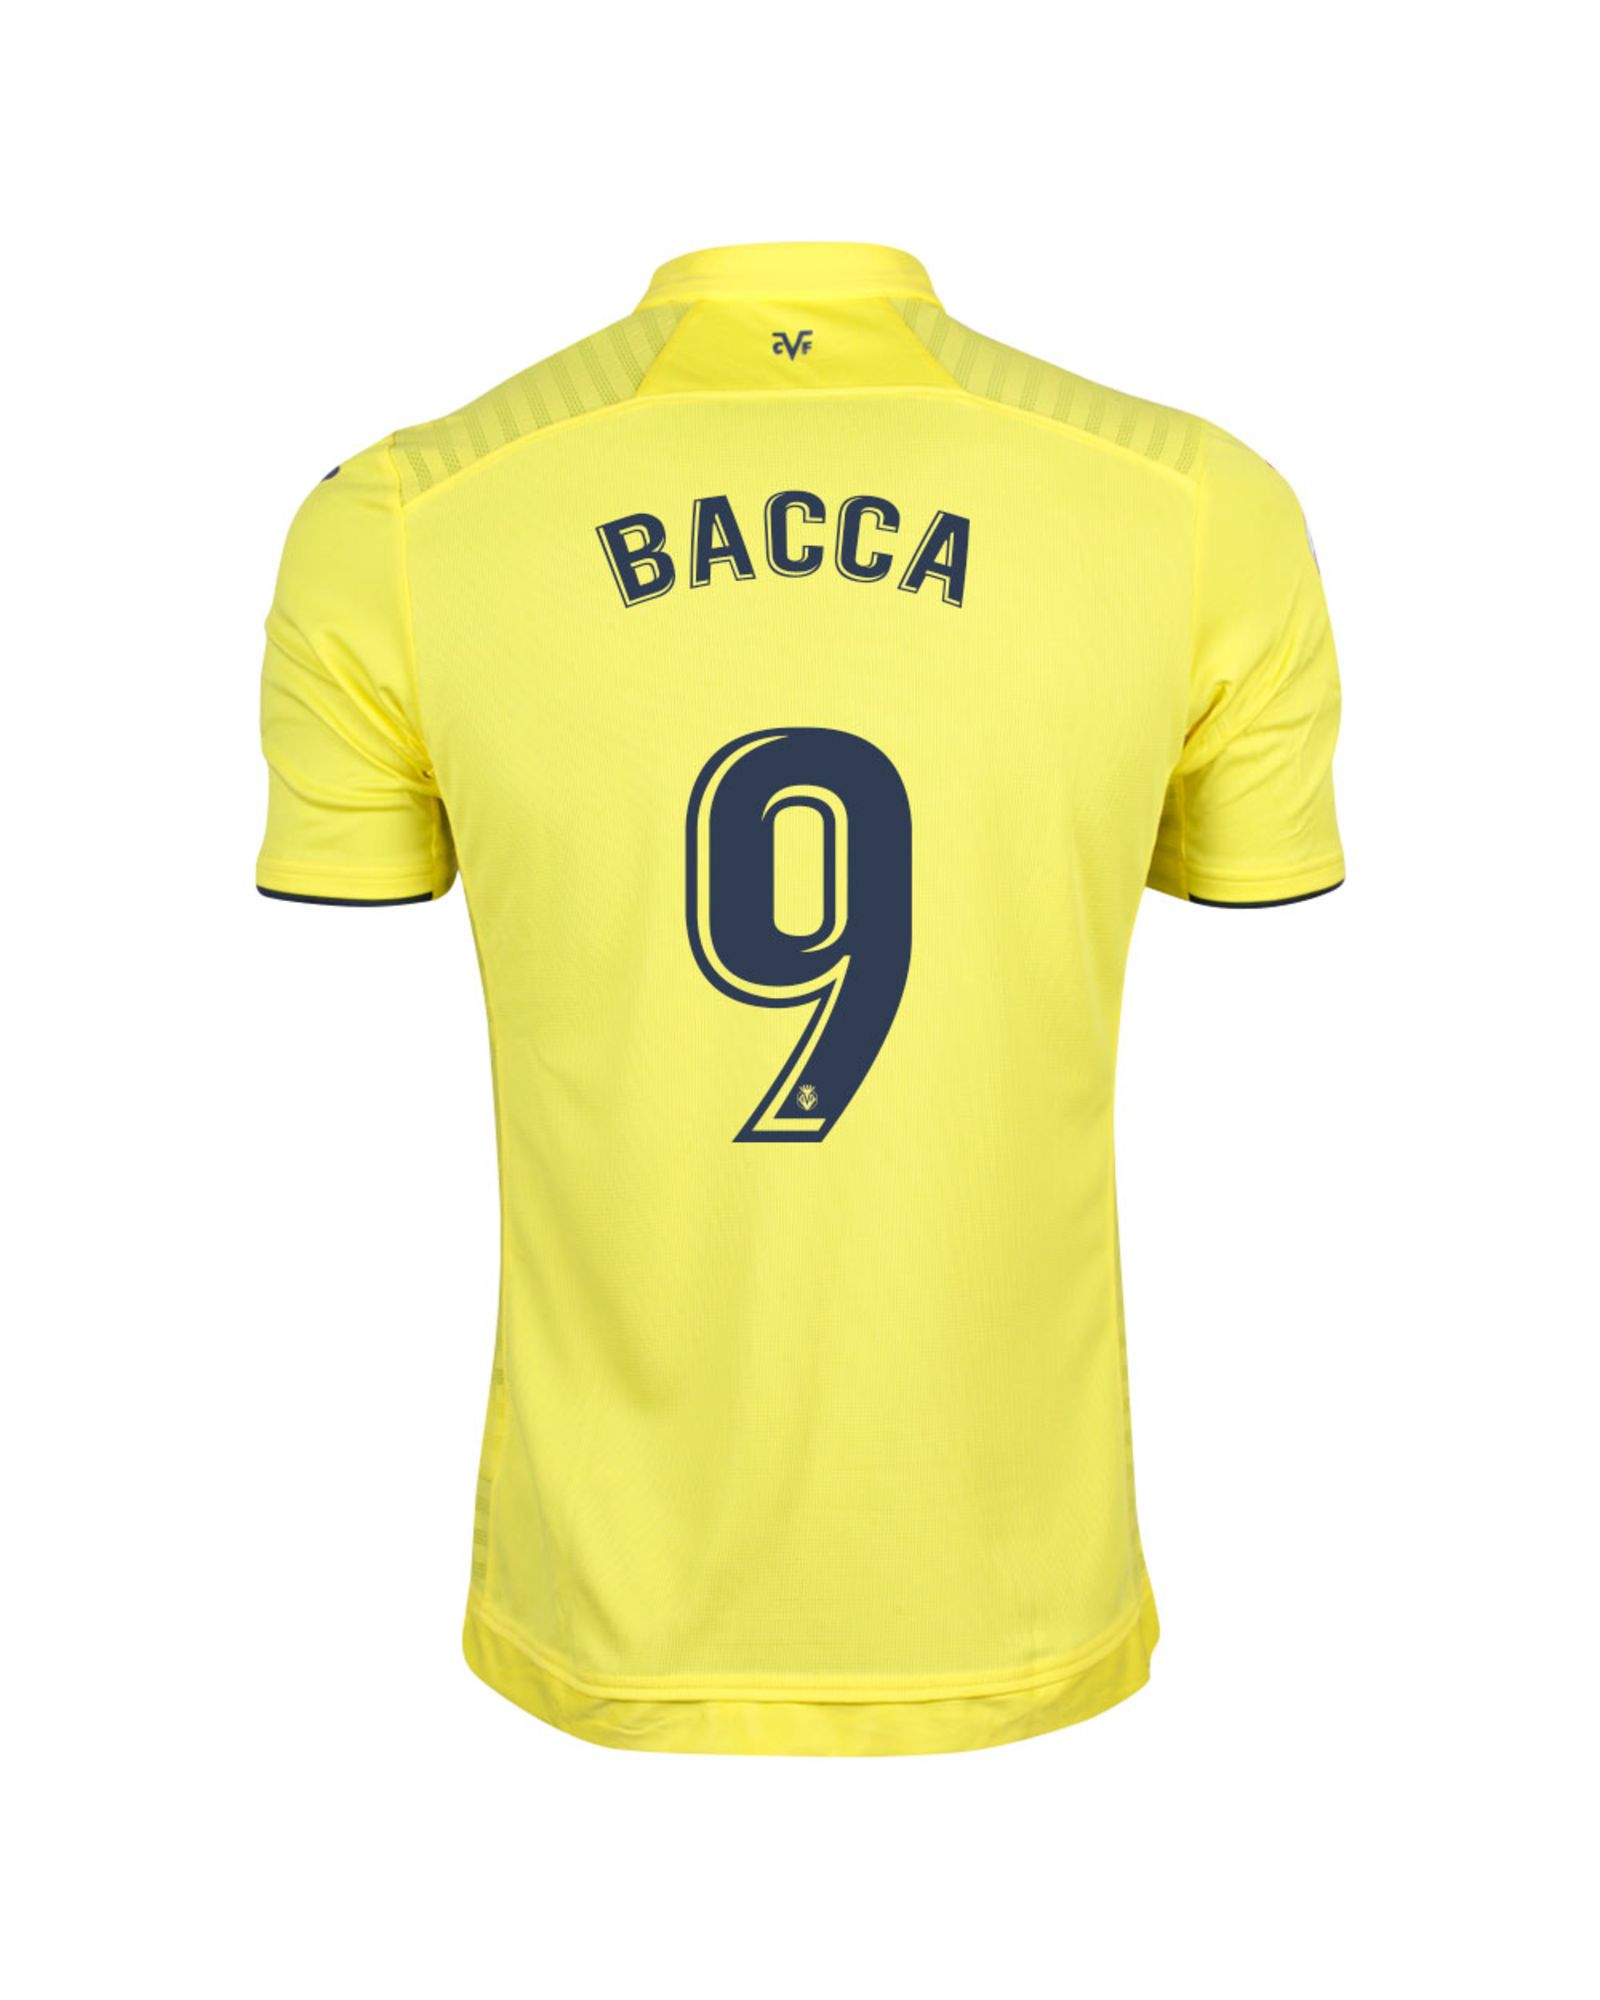 Camiseta 1ª Villarreal C.F. 2017/2018 Bacca Amarillo - Fútbol Factory